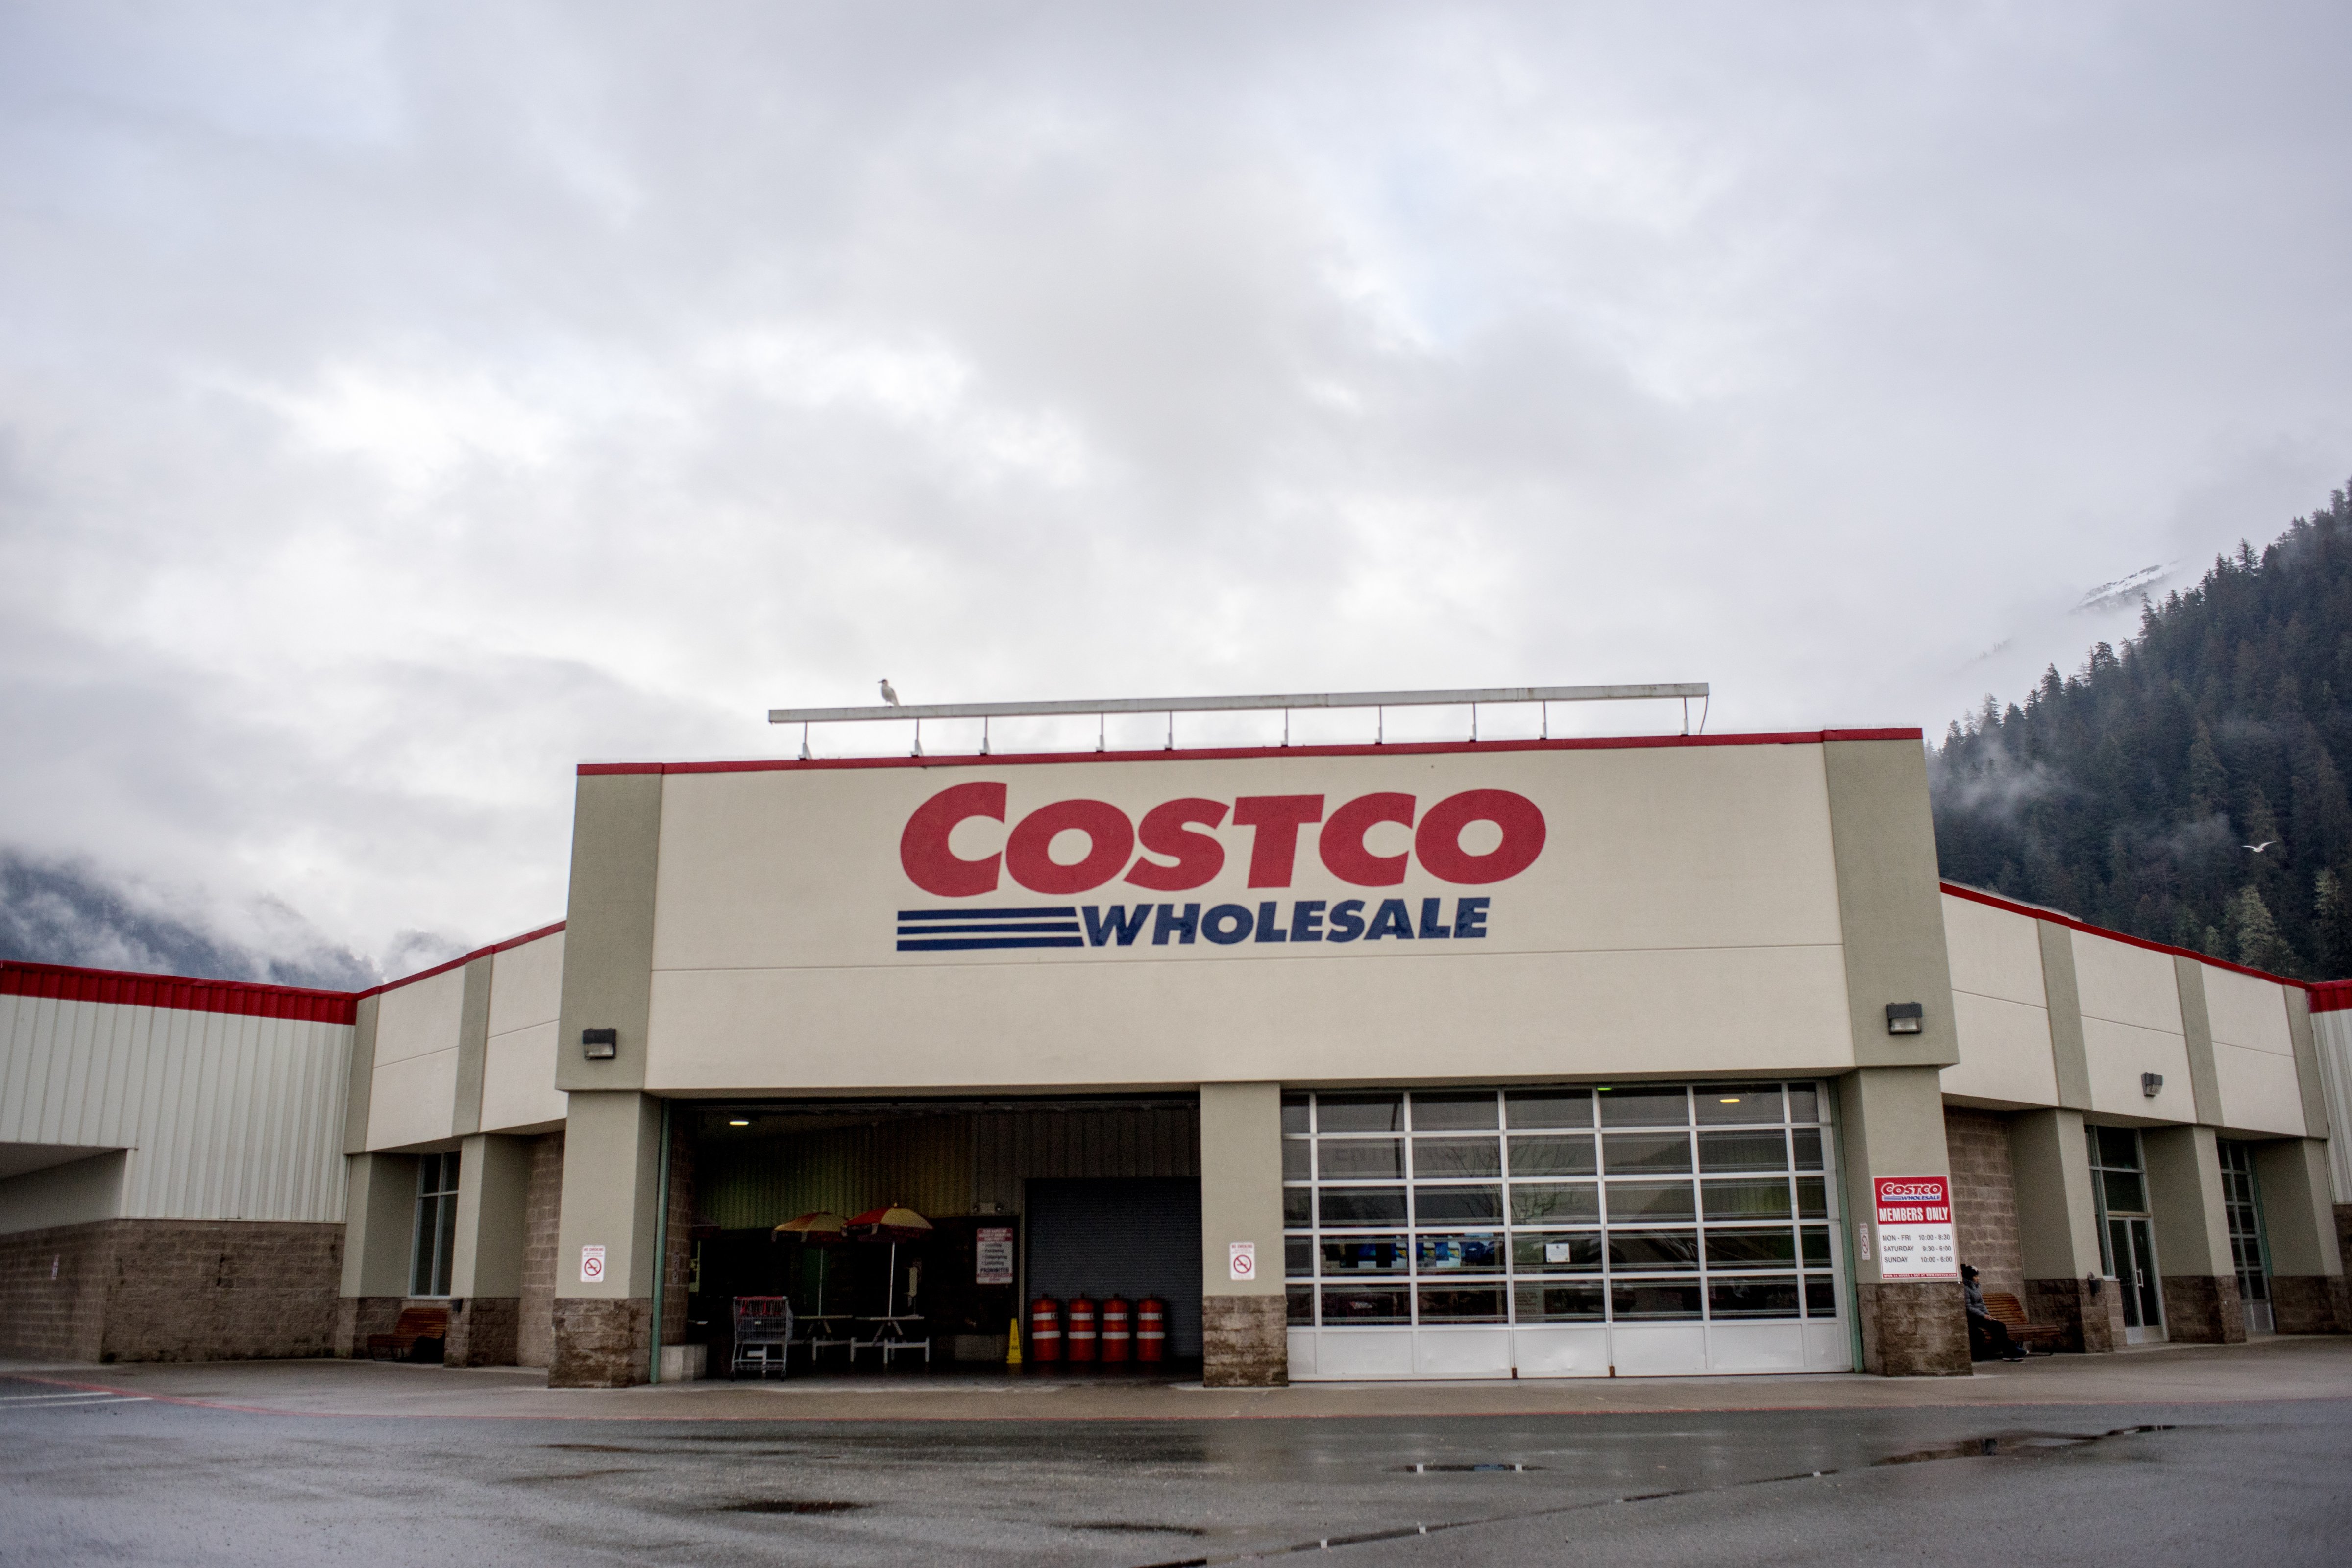 Costco store in Juneau, Alaska. (Dagny Willis&mdash;Moment Editorial/Getty Images)